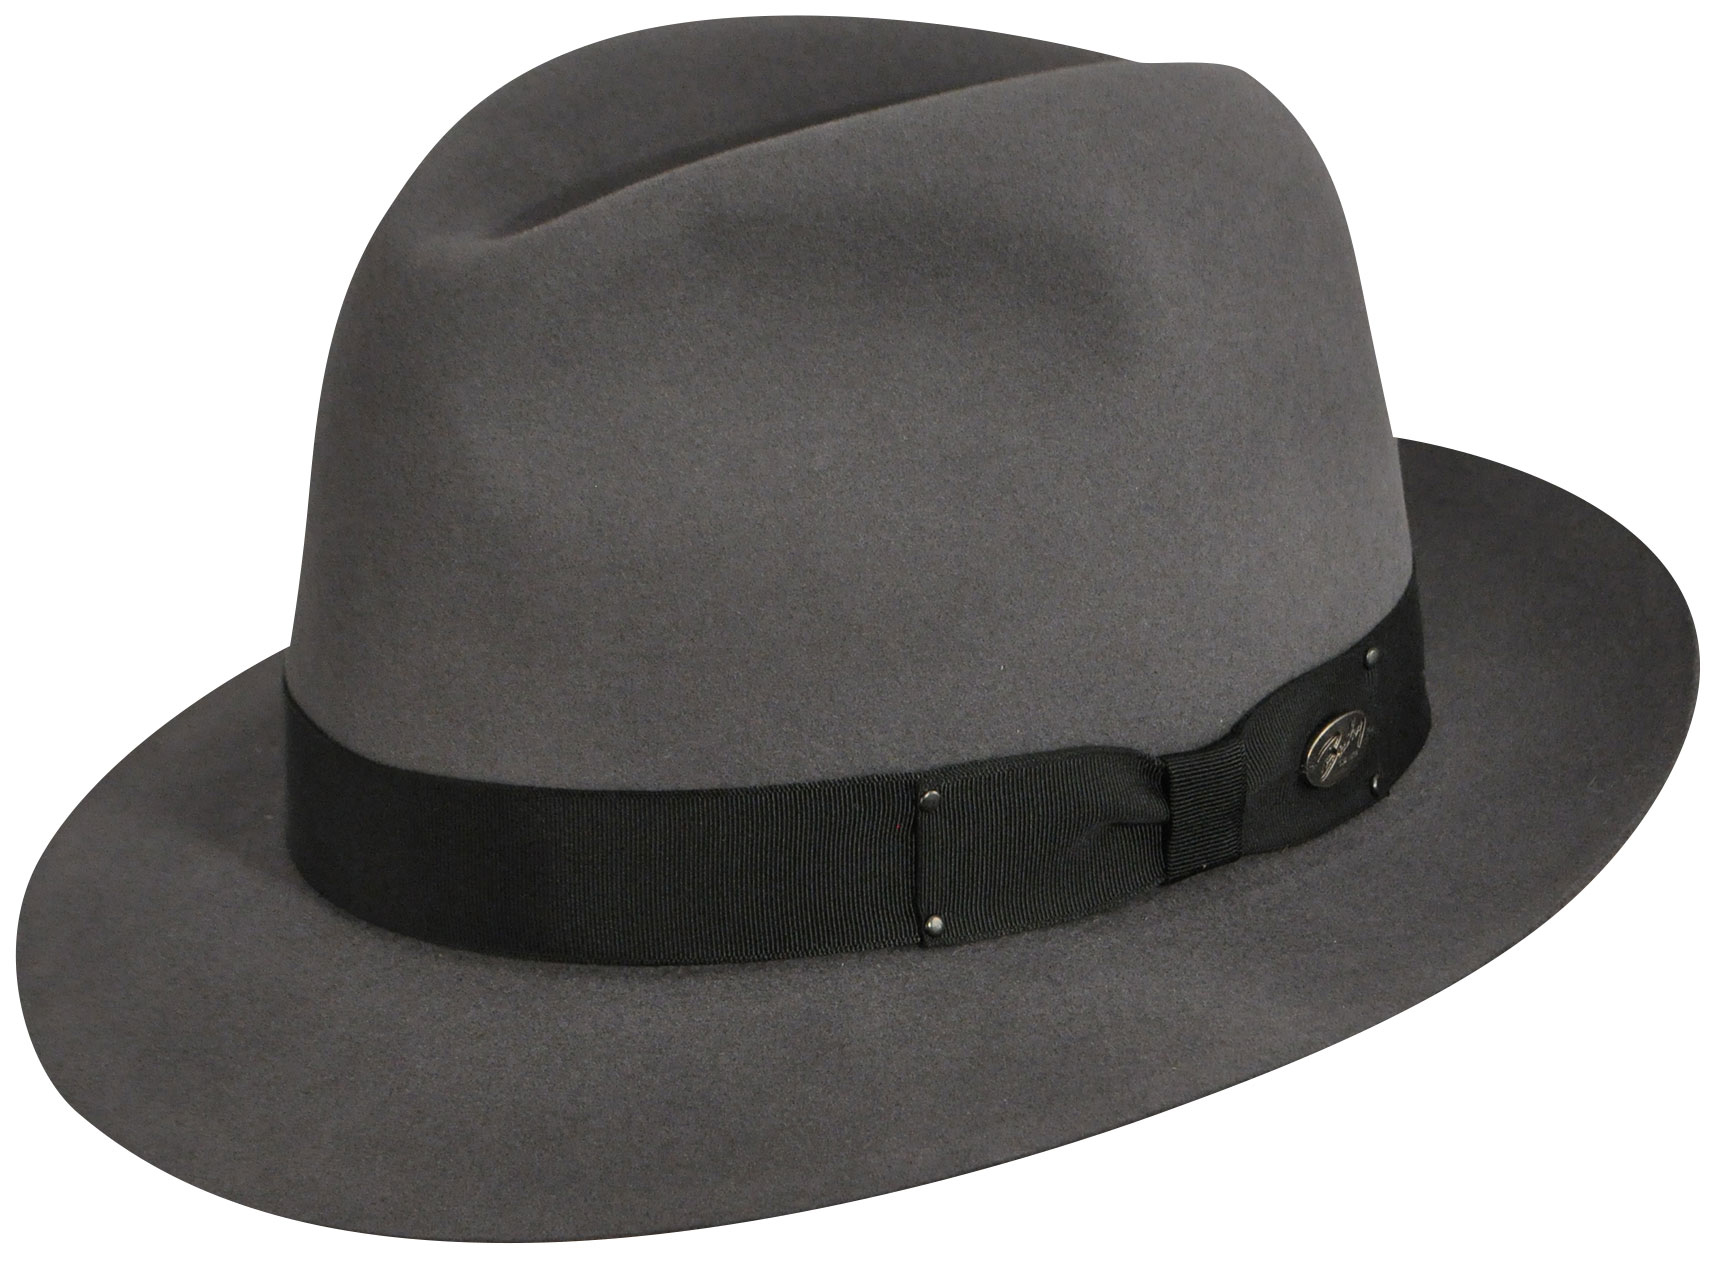 vamos-usar-chapeu-masculino-estilo-alexandre-taleb (5)